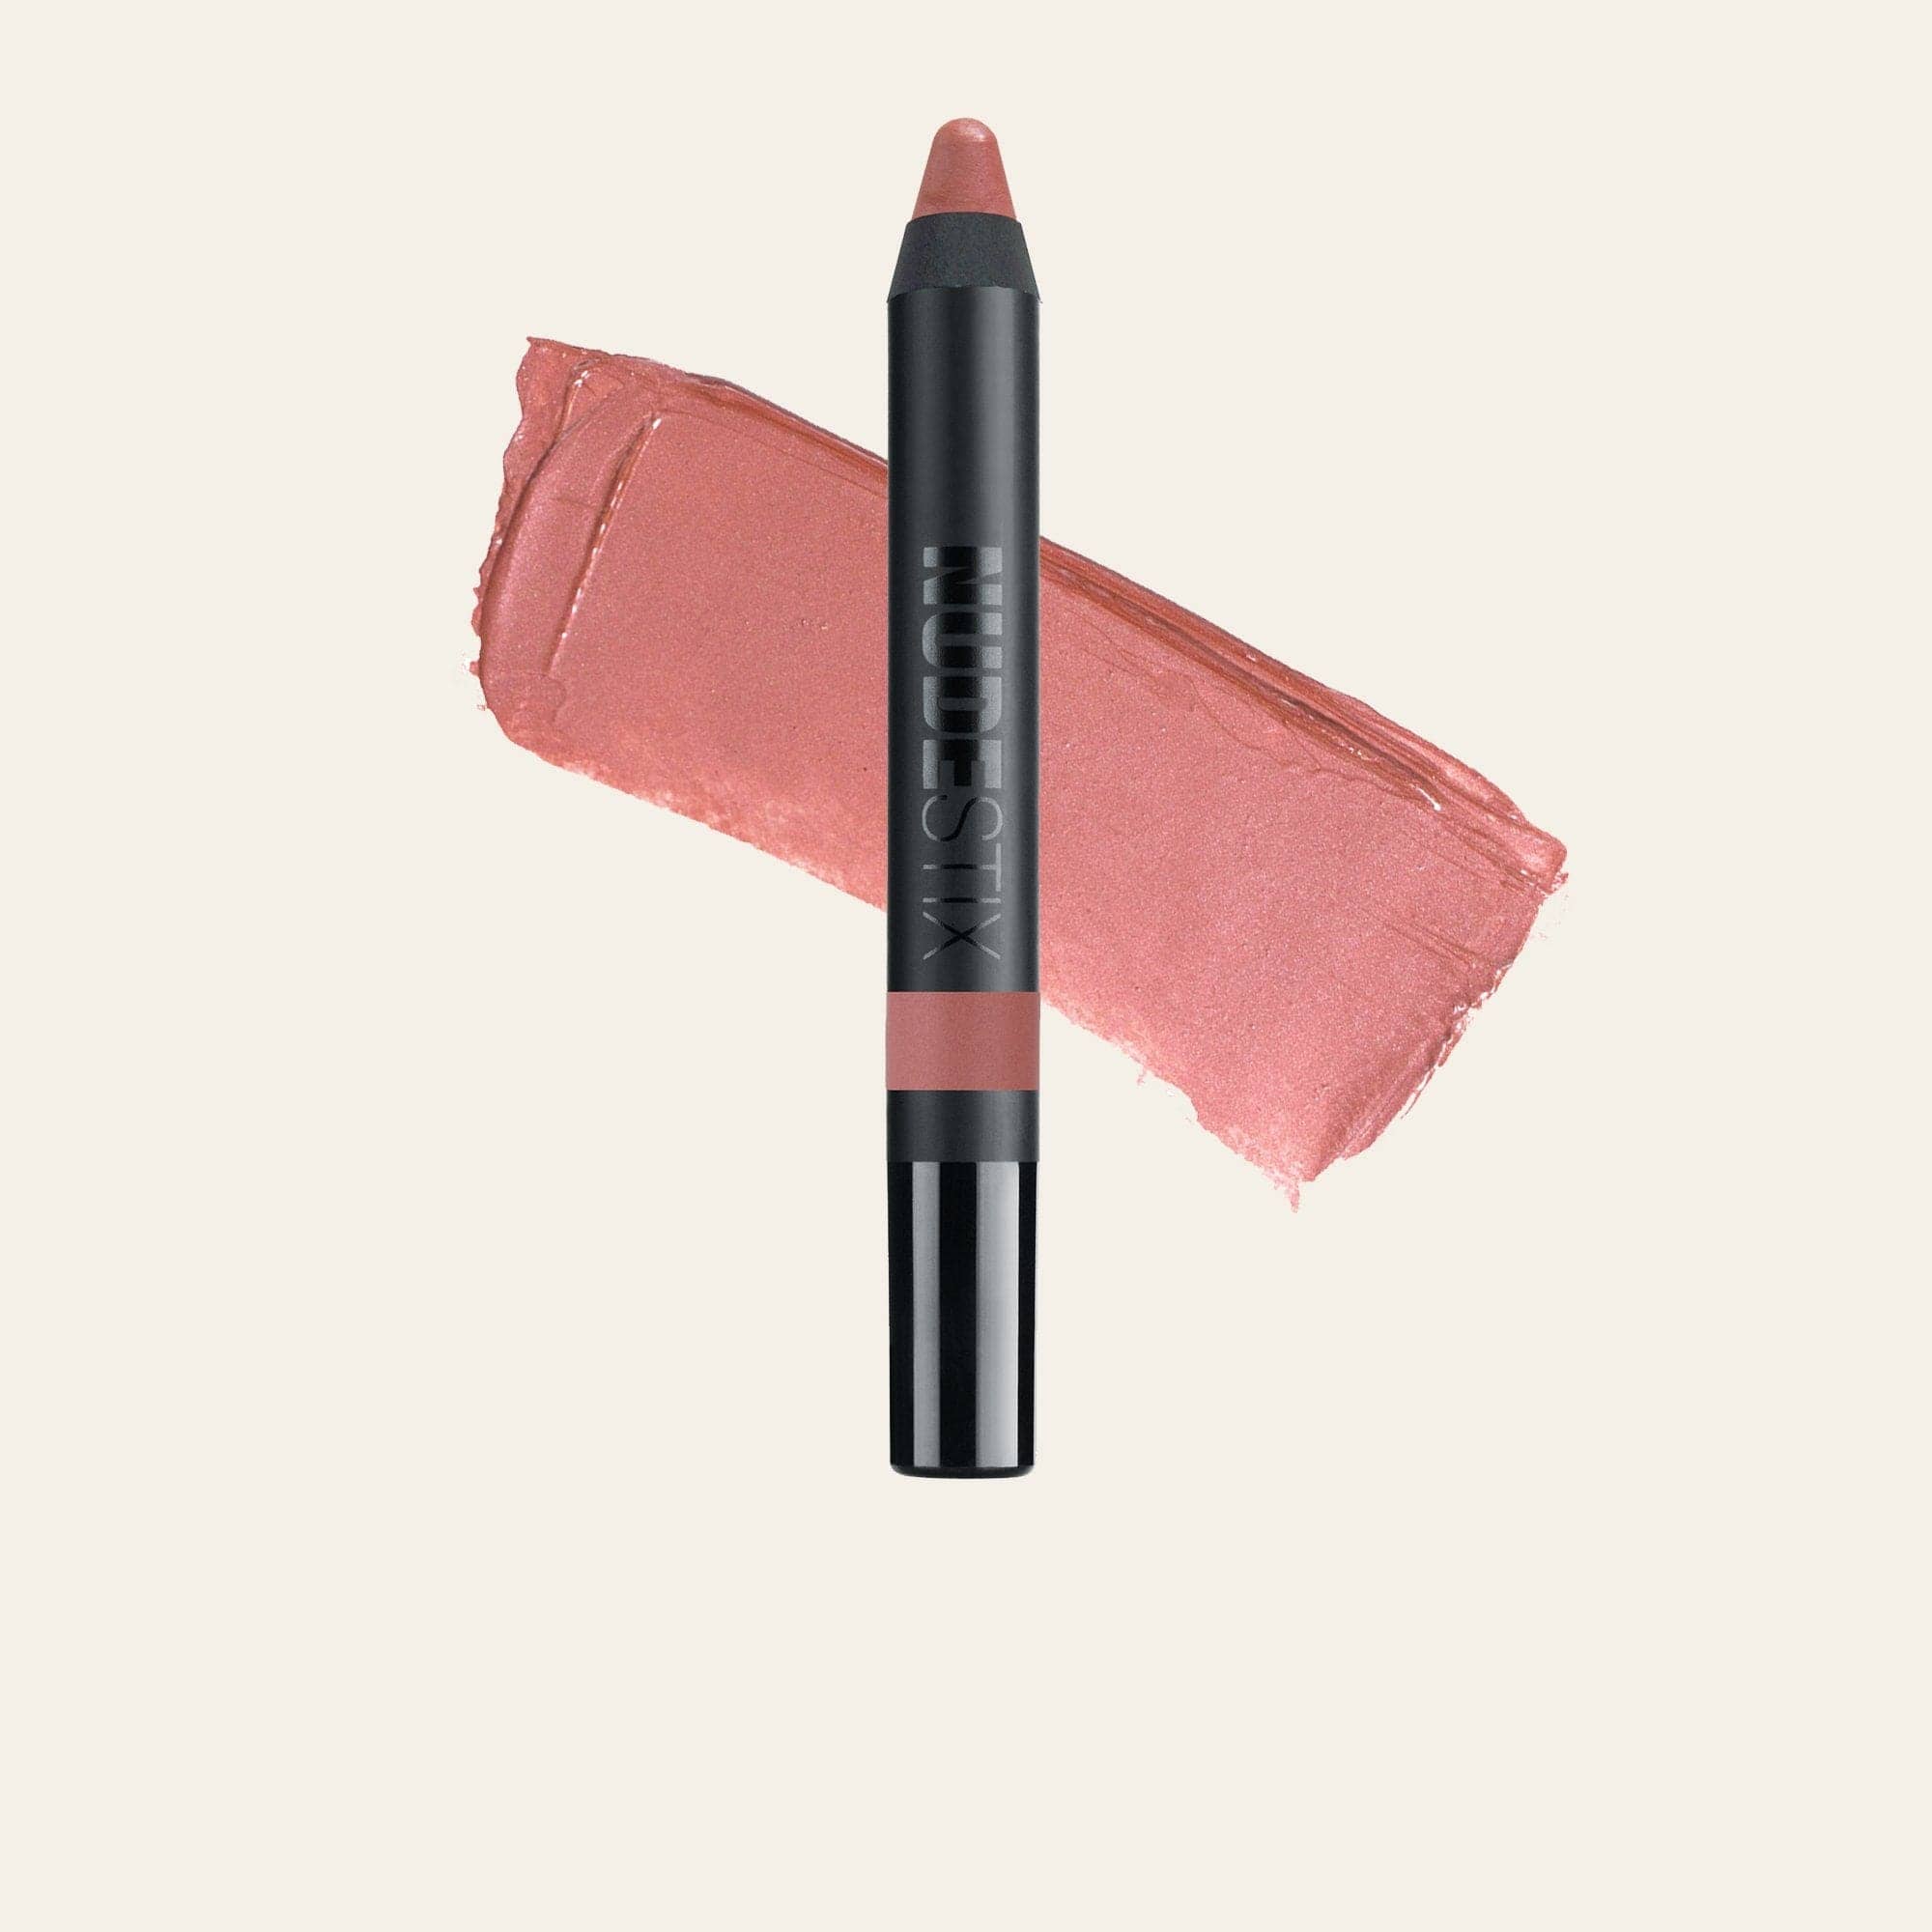 N°1 De CHANEL Red Camellia Revitalizing Lip & Cheek Balm